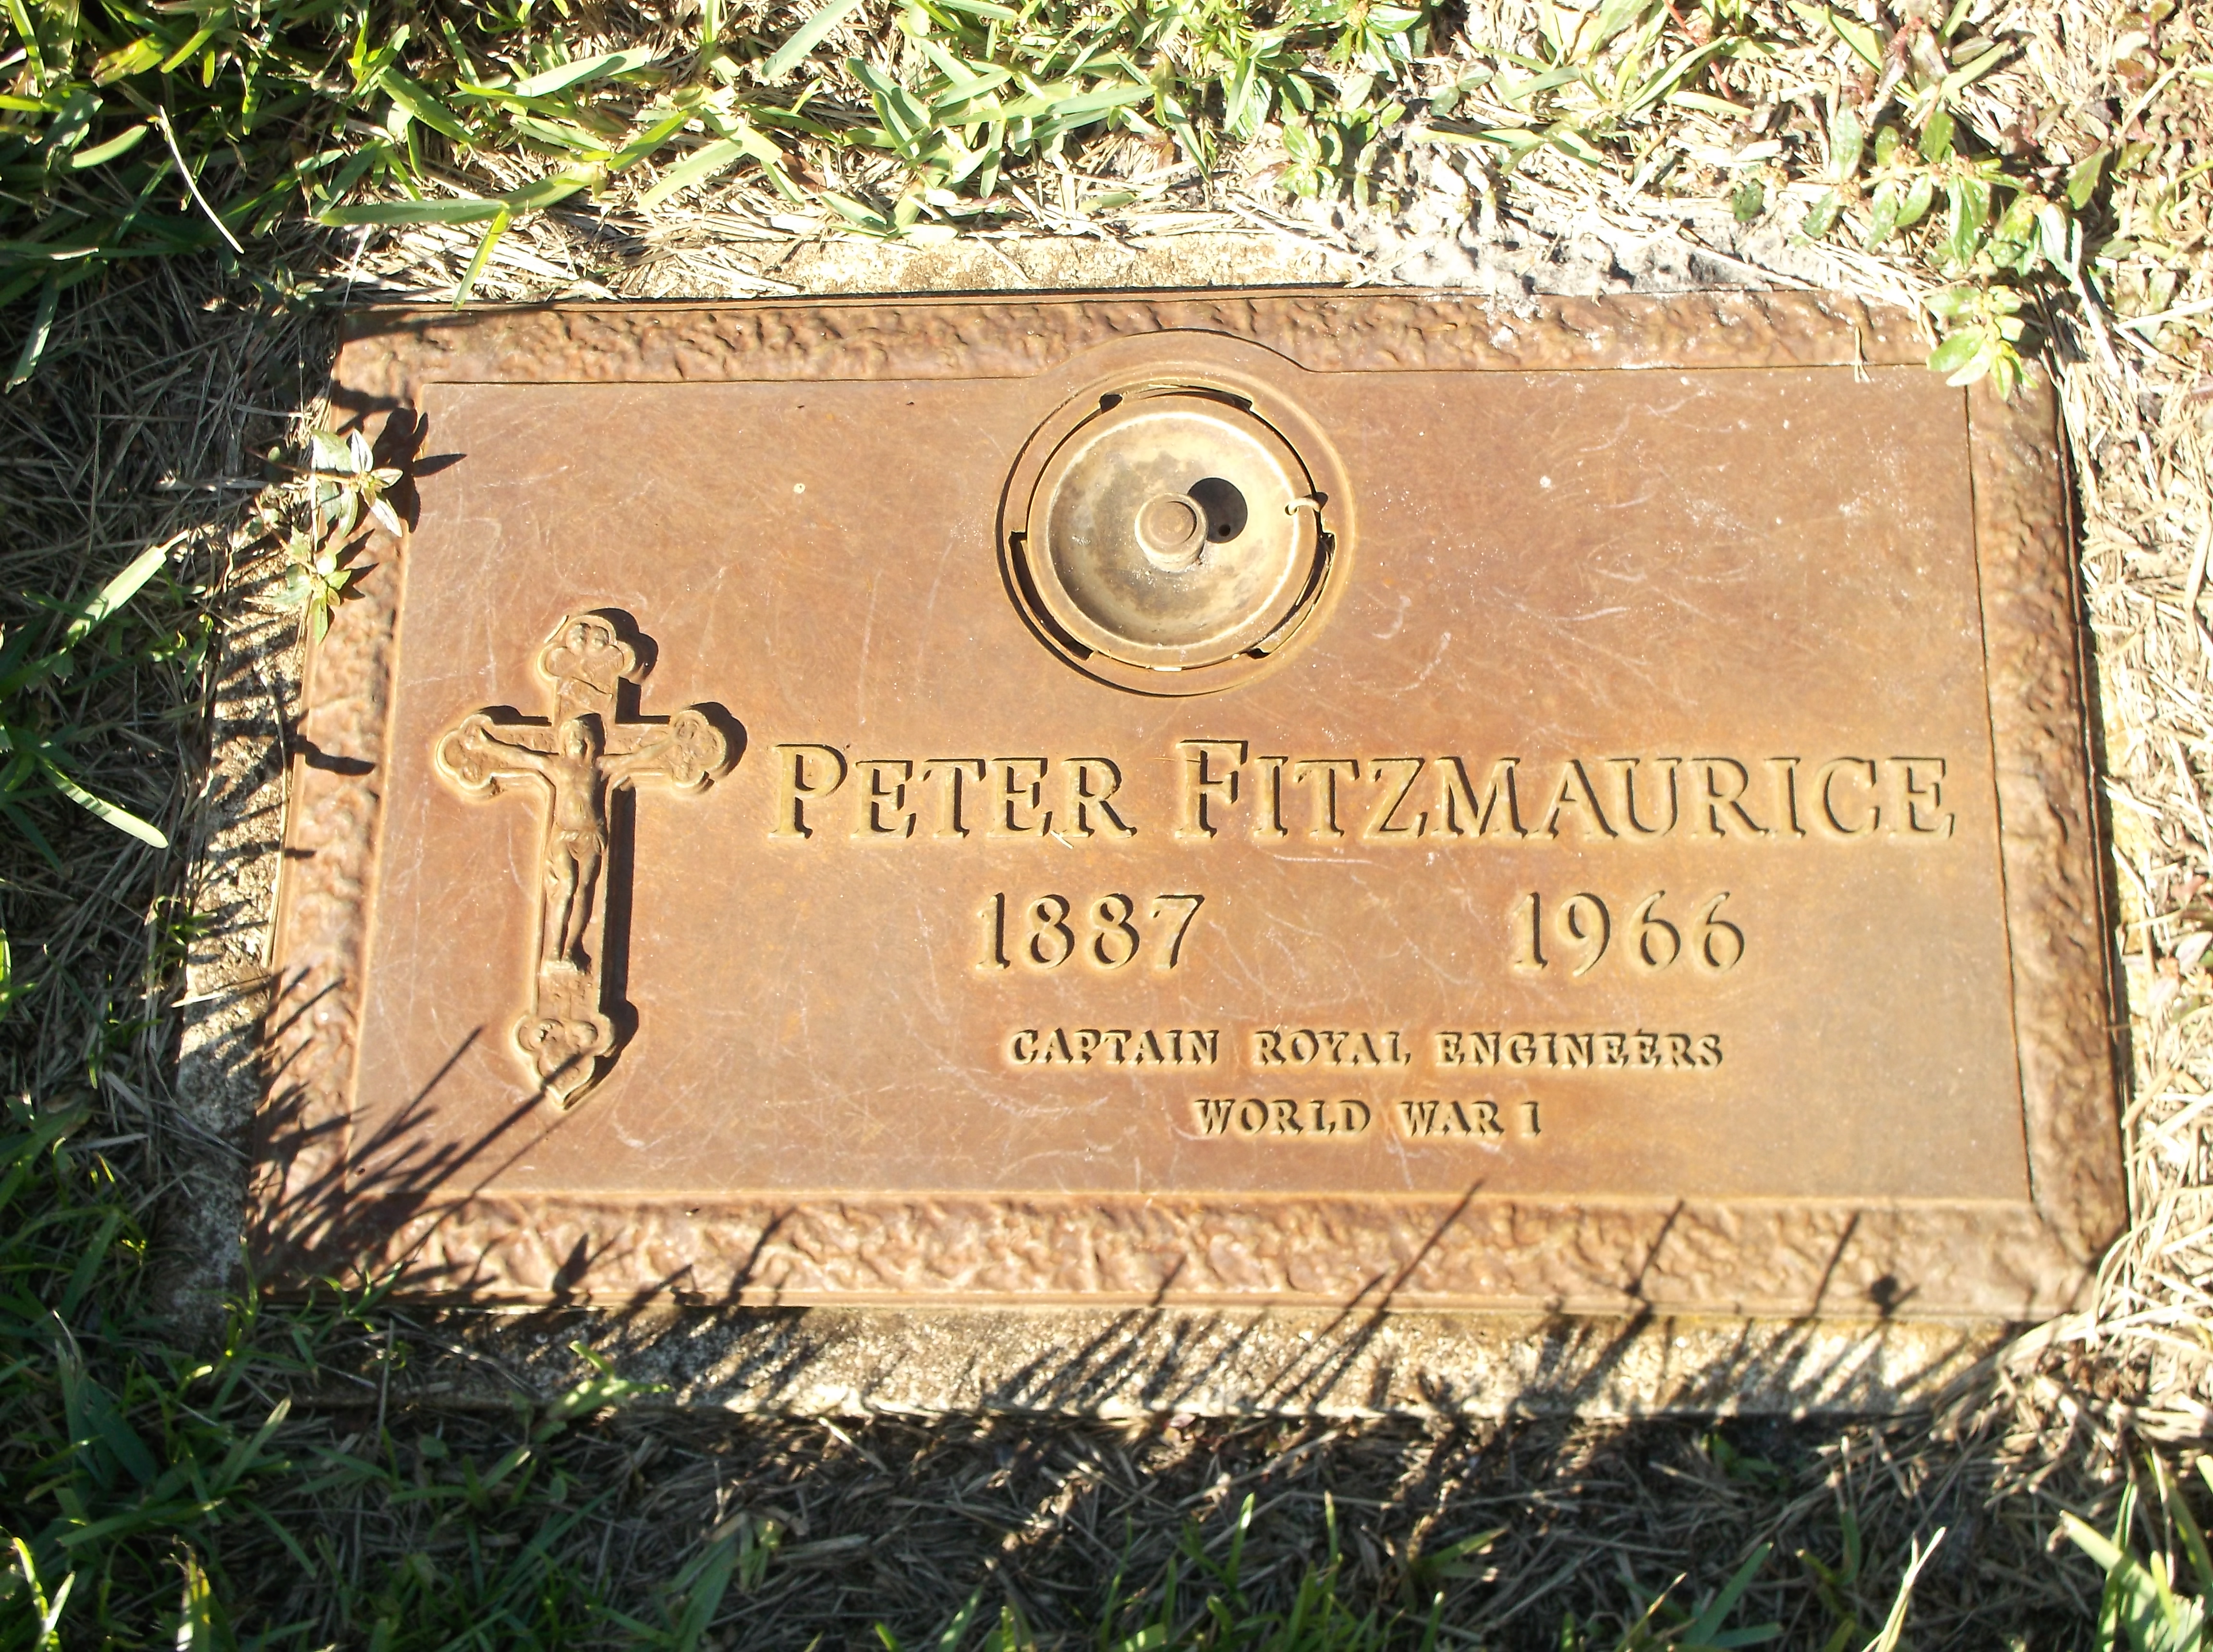 Peter Fitzmaurice